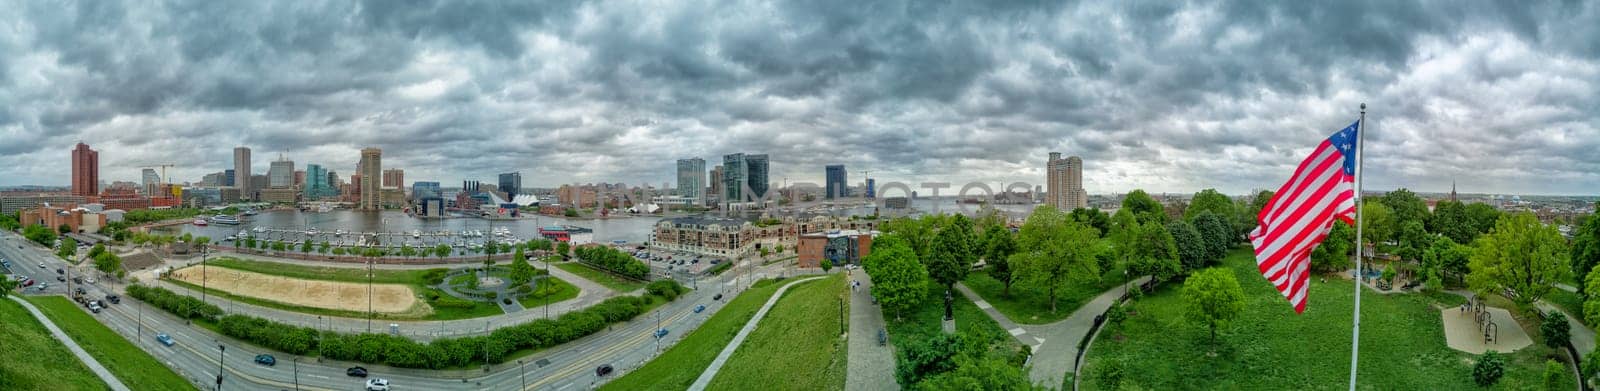 Baltimore aerial view panorama cityscape landscape